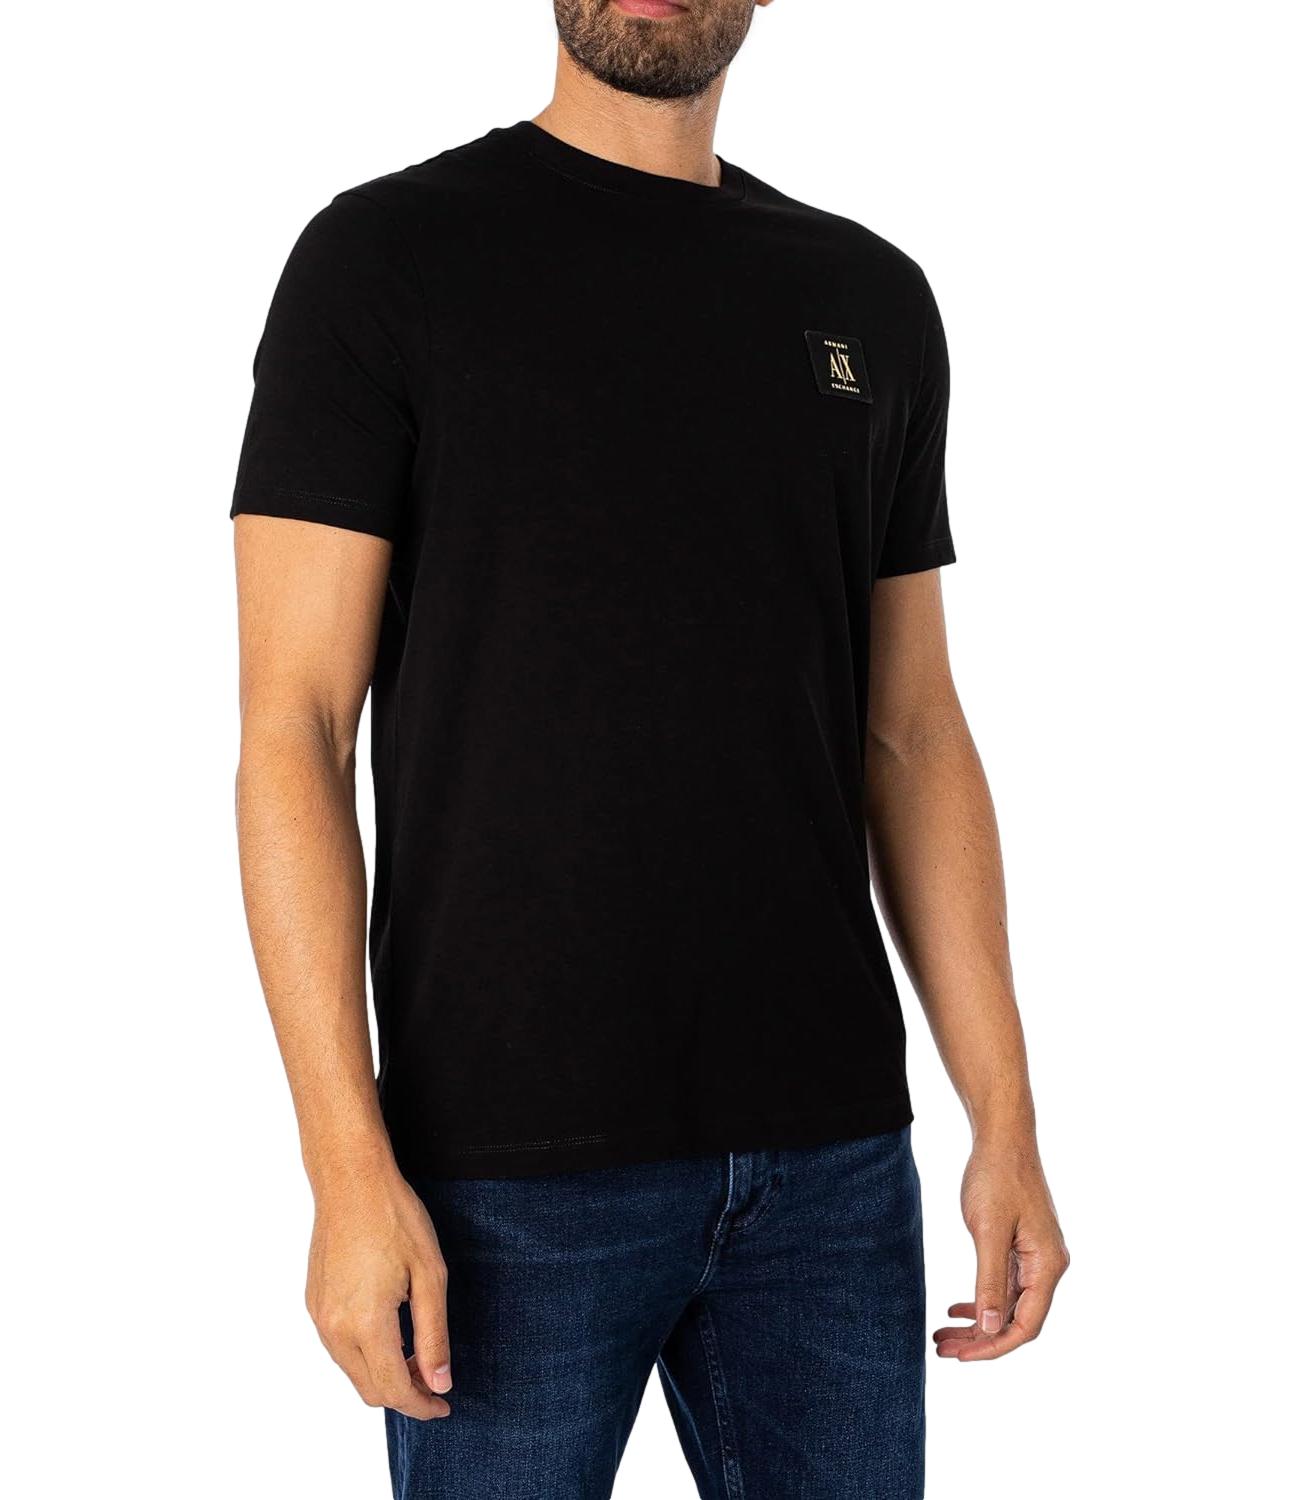 Armani Exchange t-shirt uomo nera con logo AX dorato